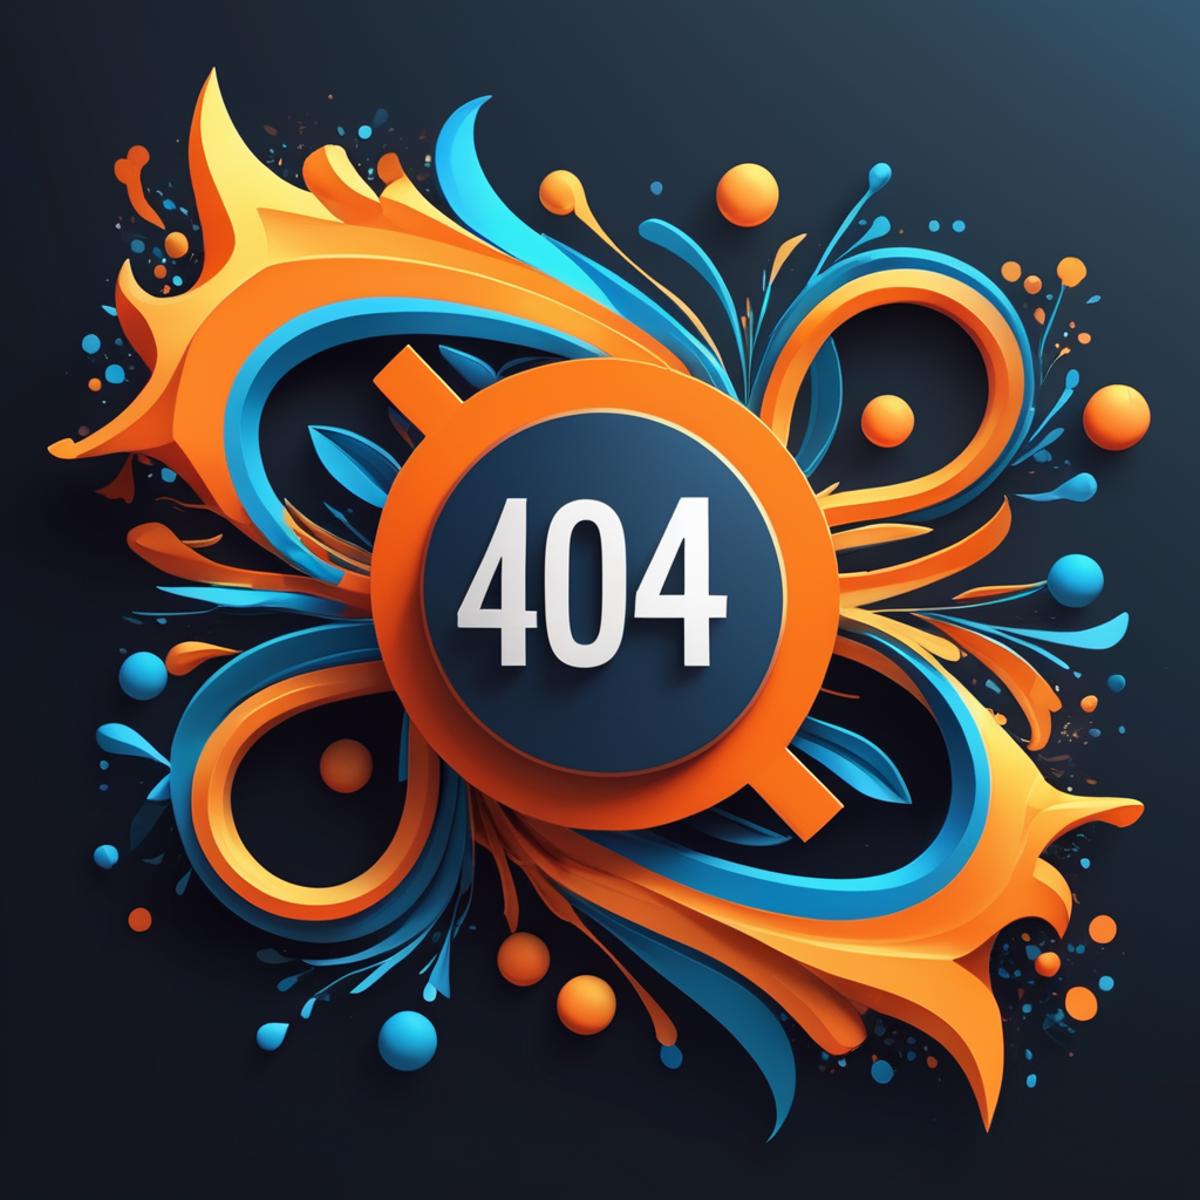 404 CivitAI Toolkit image by idle